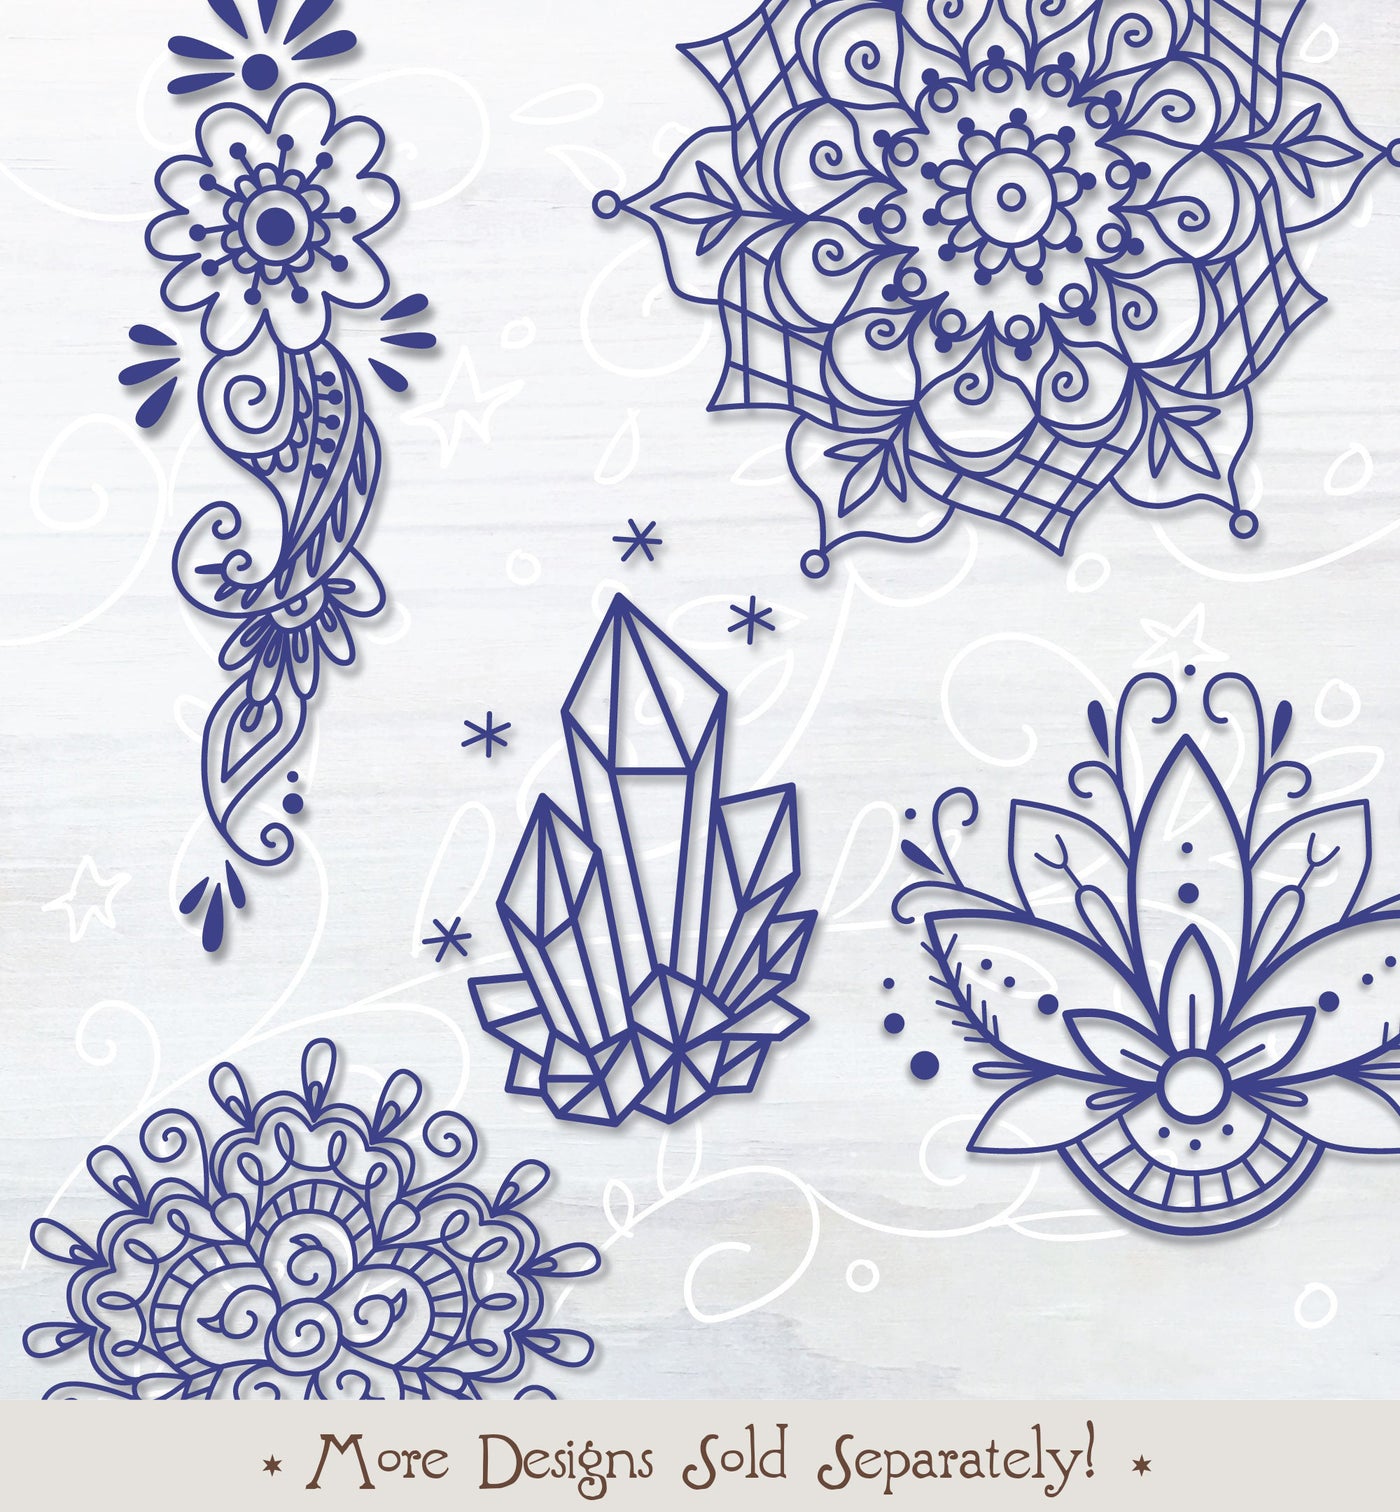 SVG Lotus Flower cut file for Cricut, Silhouette, PNG, JPG